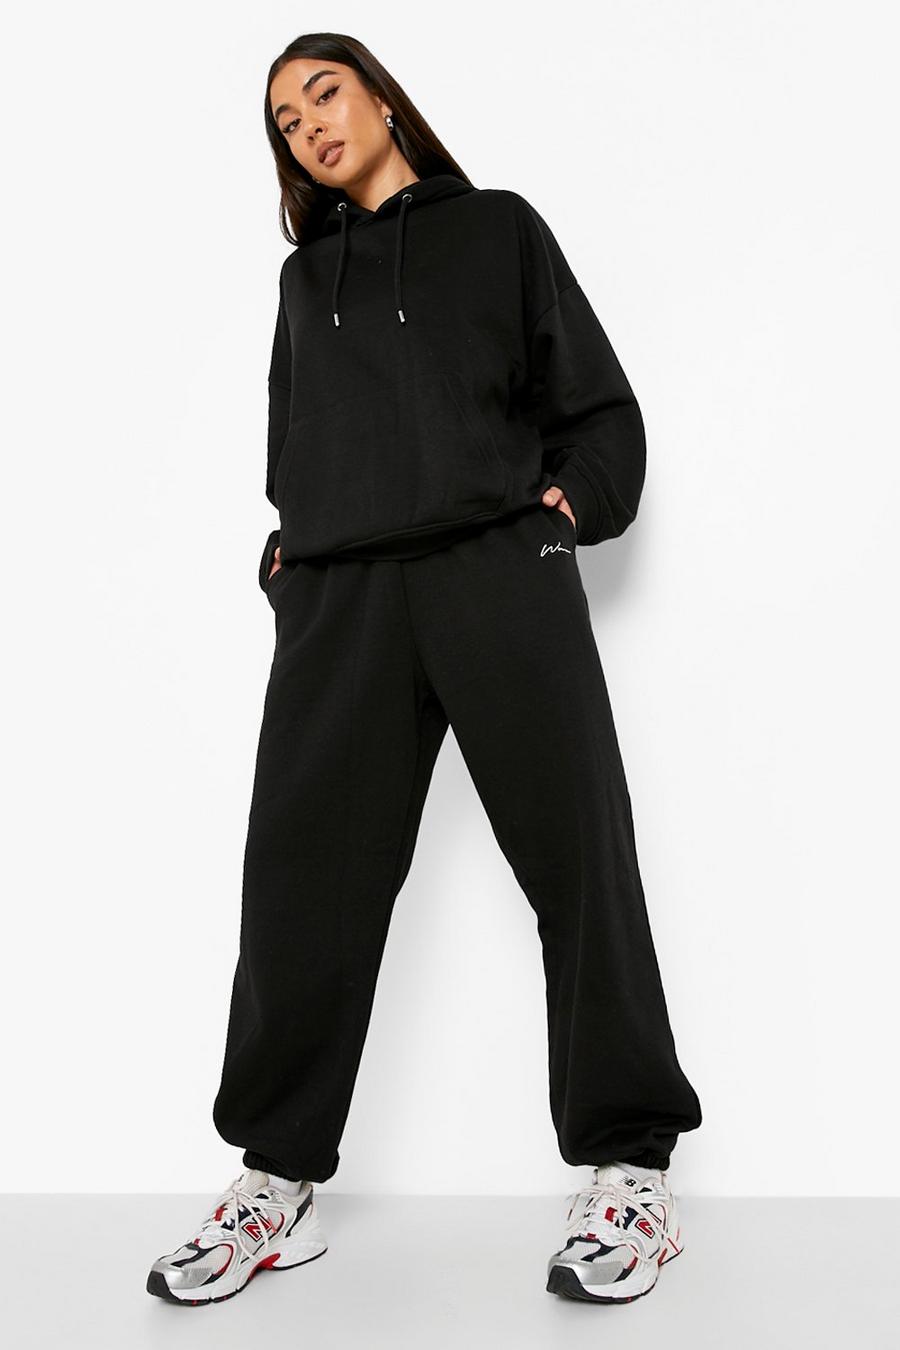 Pantalón deportivo Woman oversize reciclado, Black negro